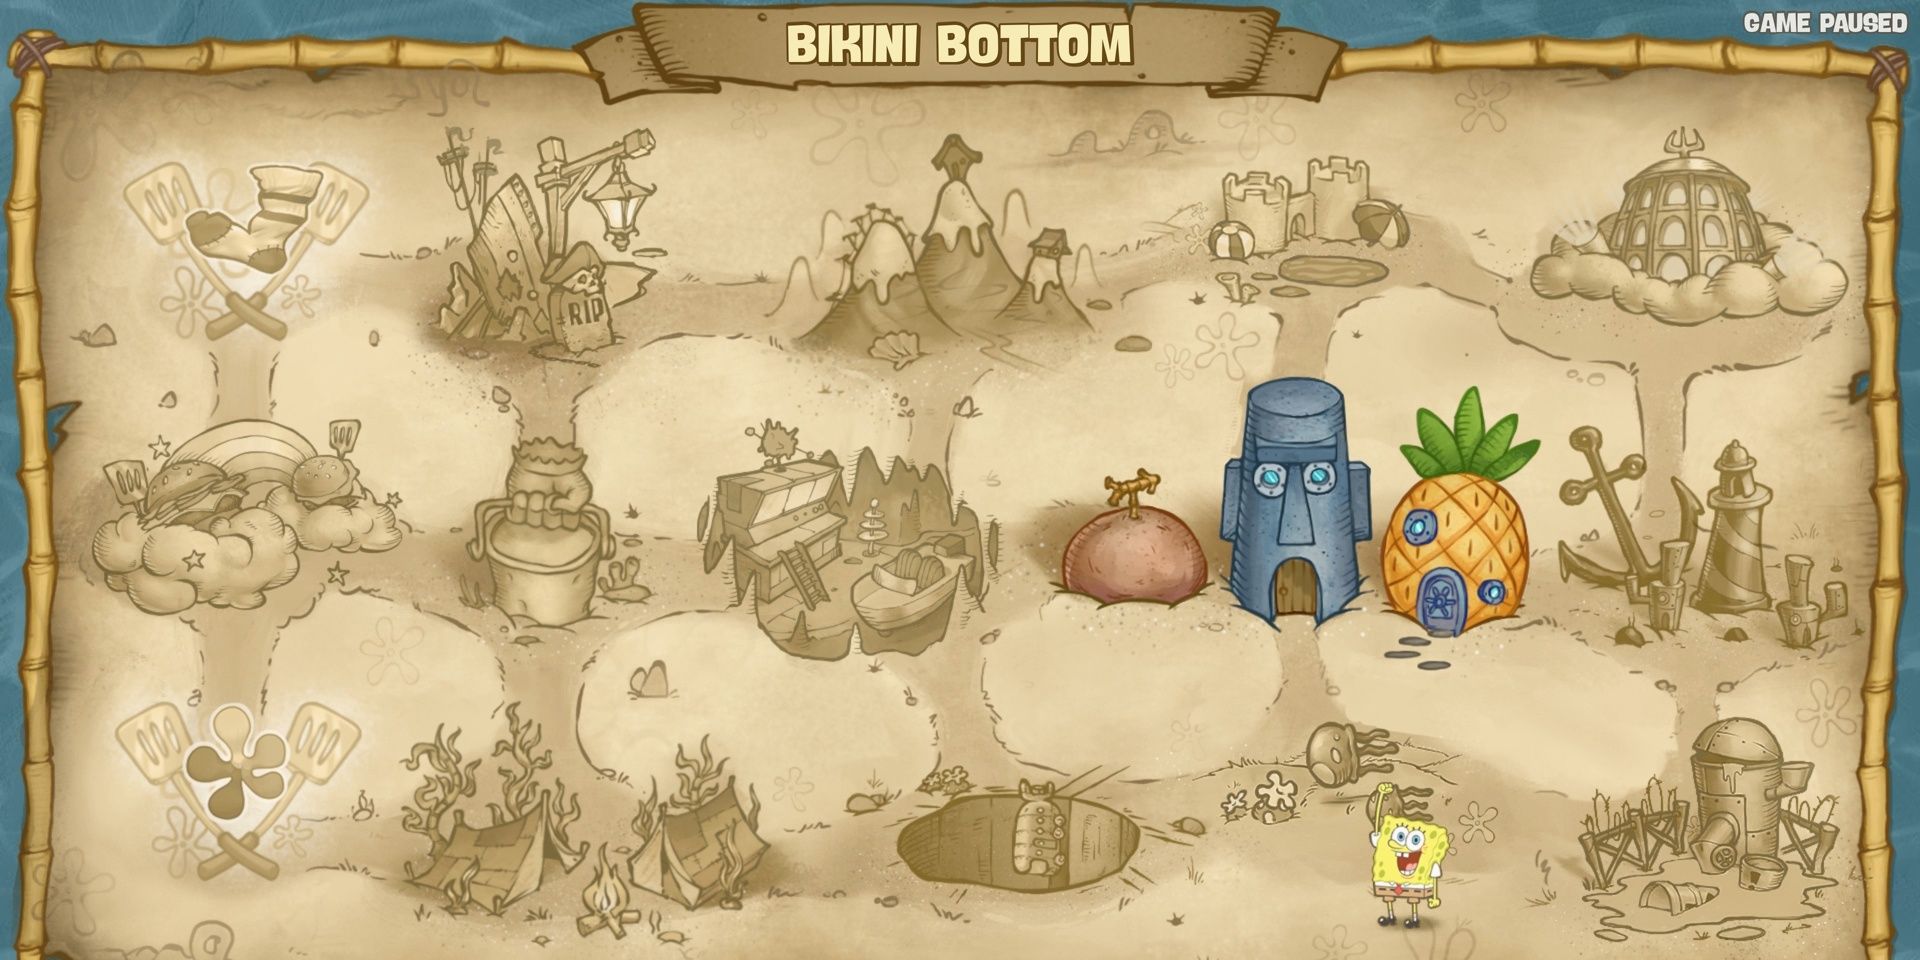 A screenshot showing the map on the pause menu in SpongeBob SquarePants: Battle for Bikini Bottom - Rehydrated